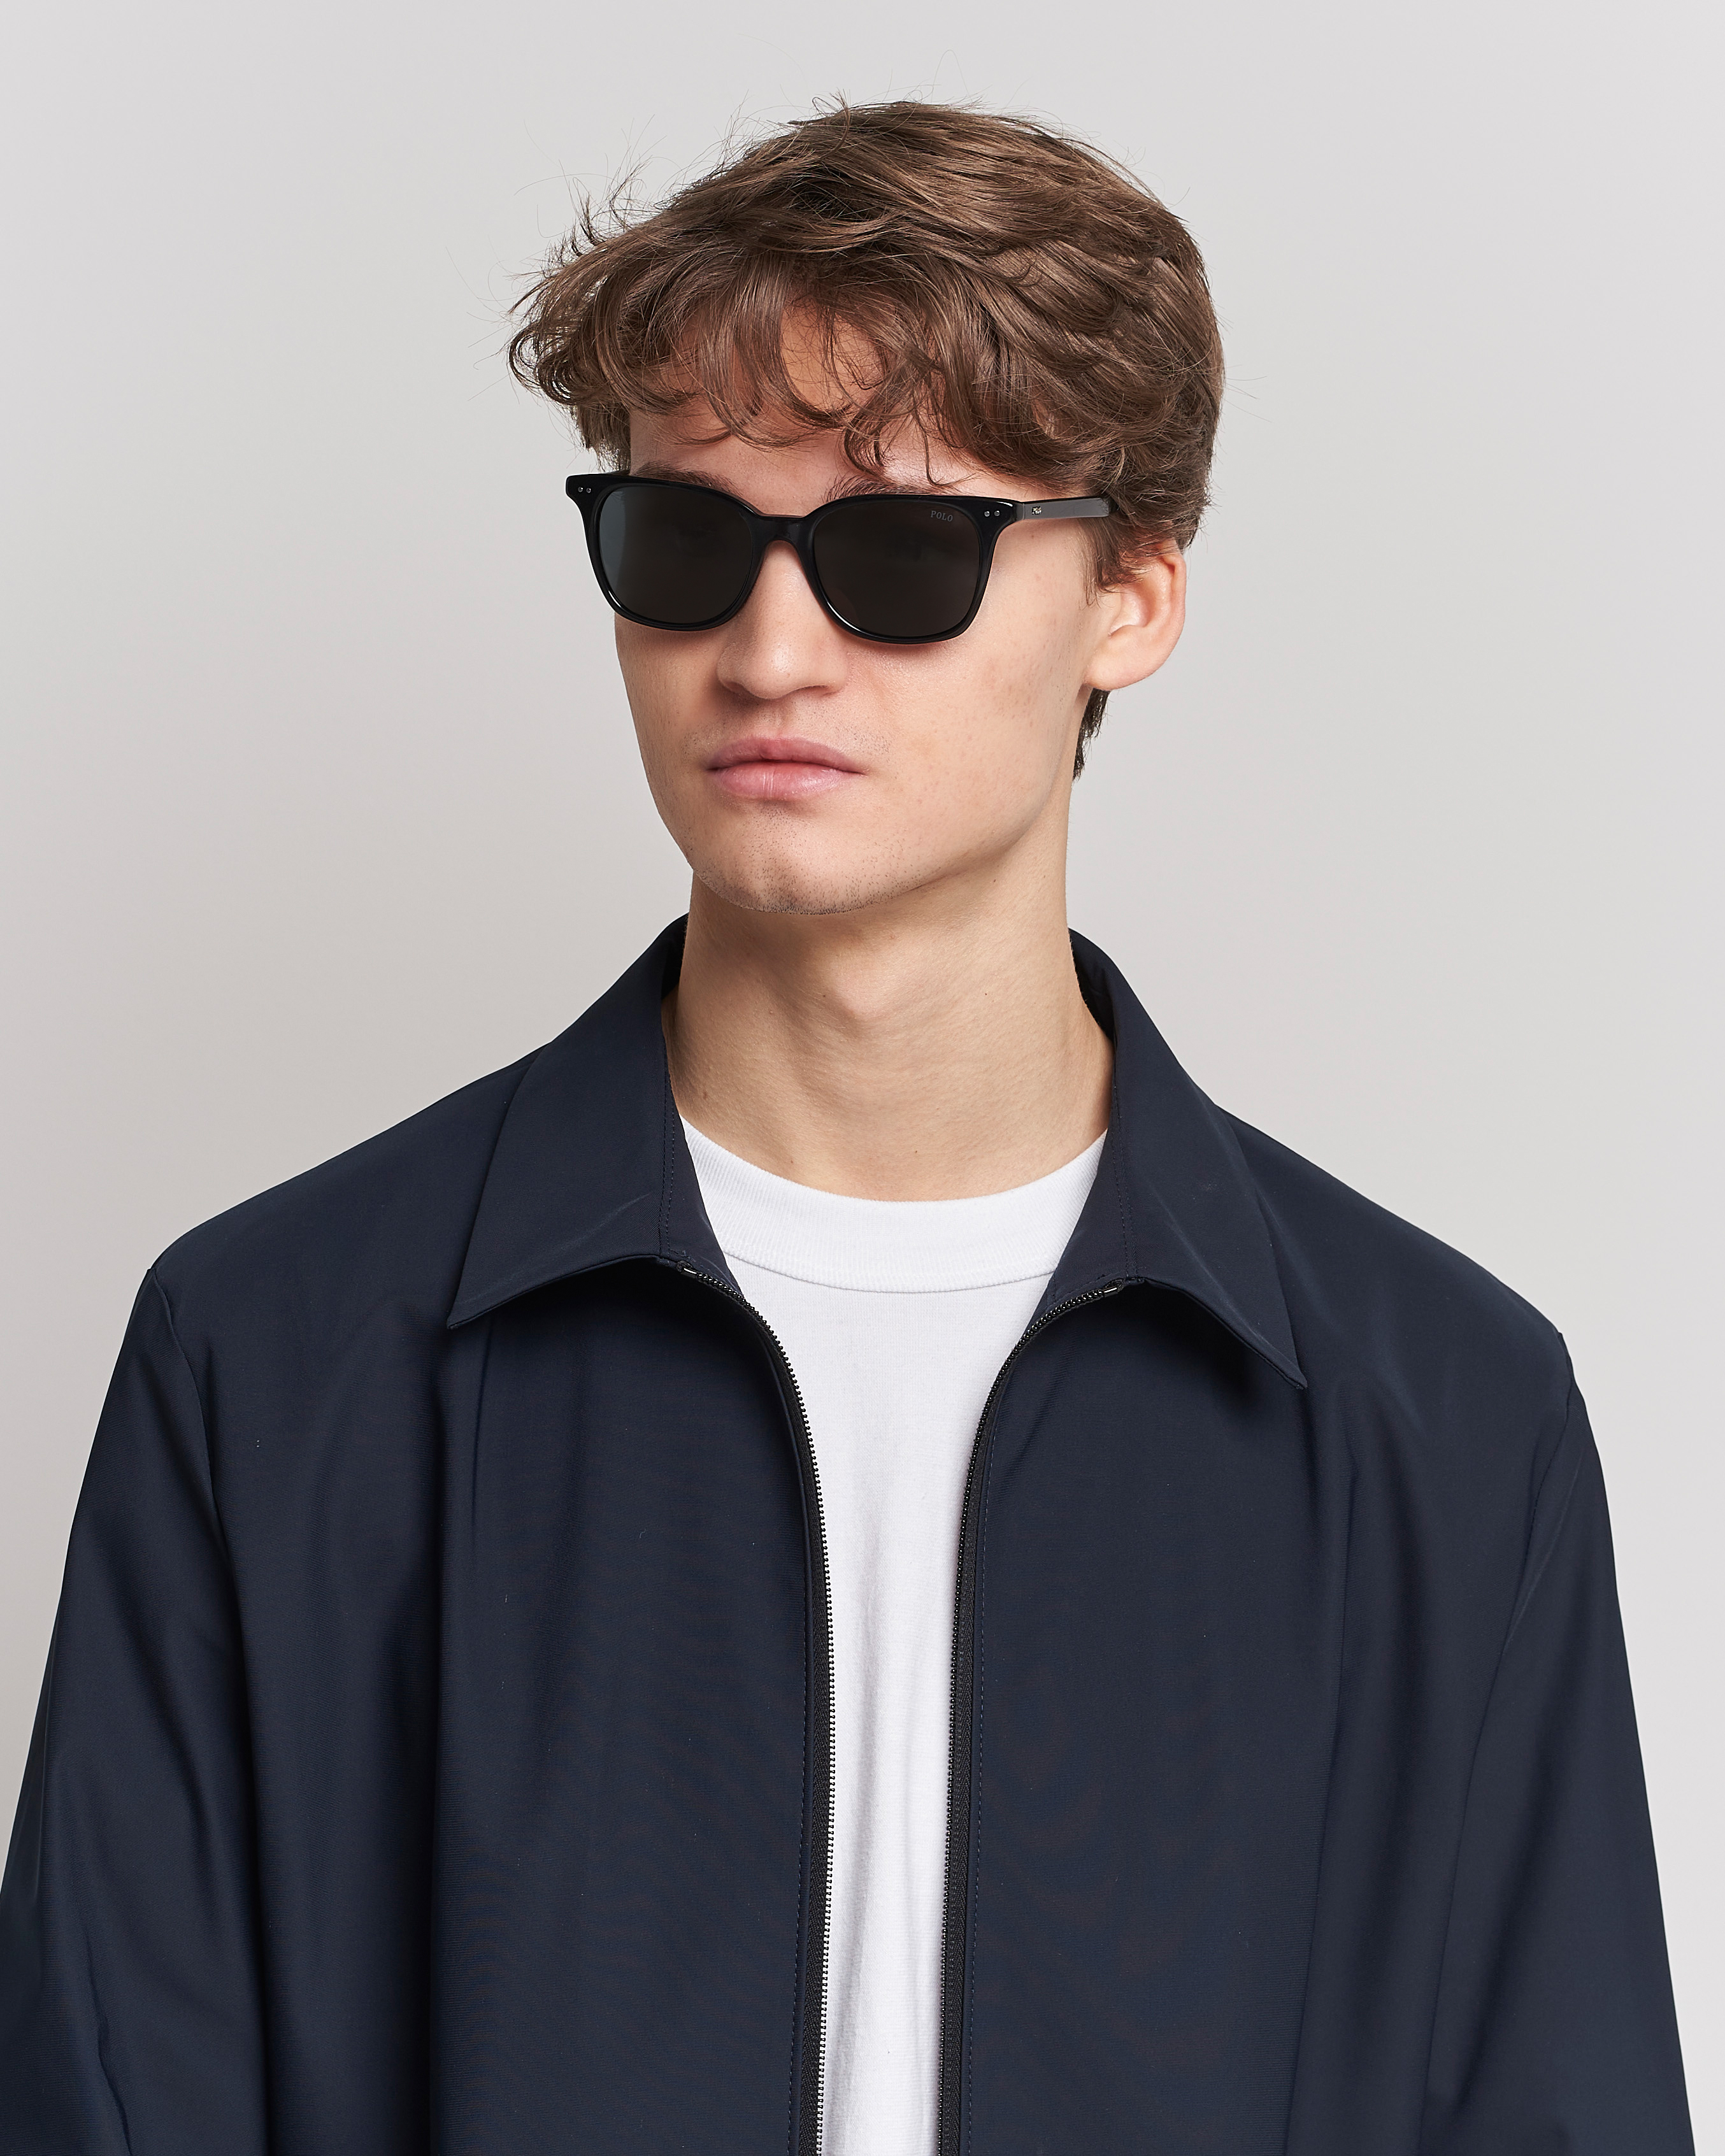 Men |  | Polo Ralph Lauren | 0PH4187 Sunglasses Shiny Black